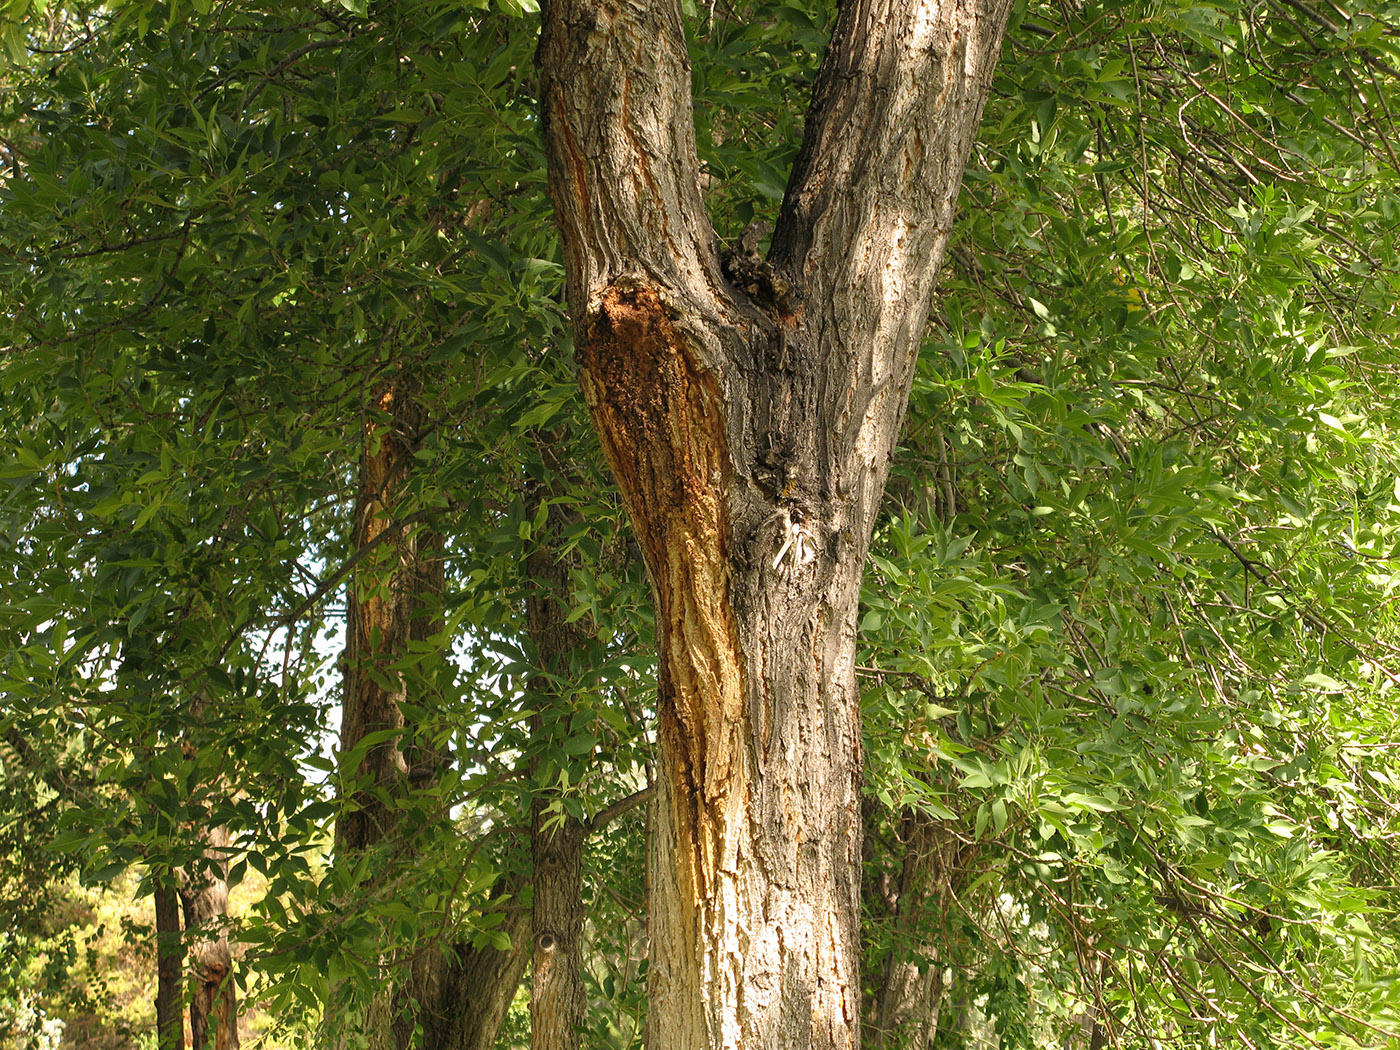 Slime flux on an elm tree.